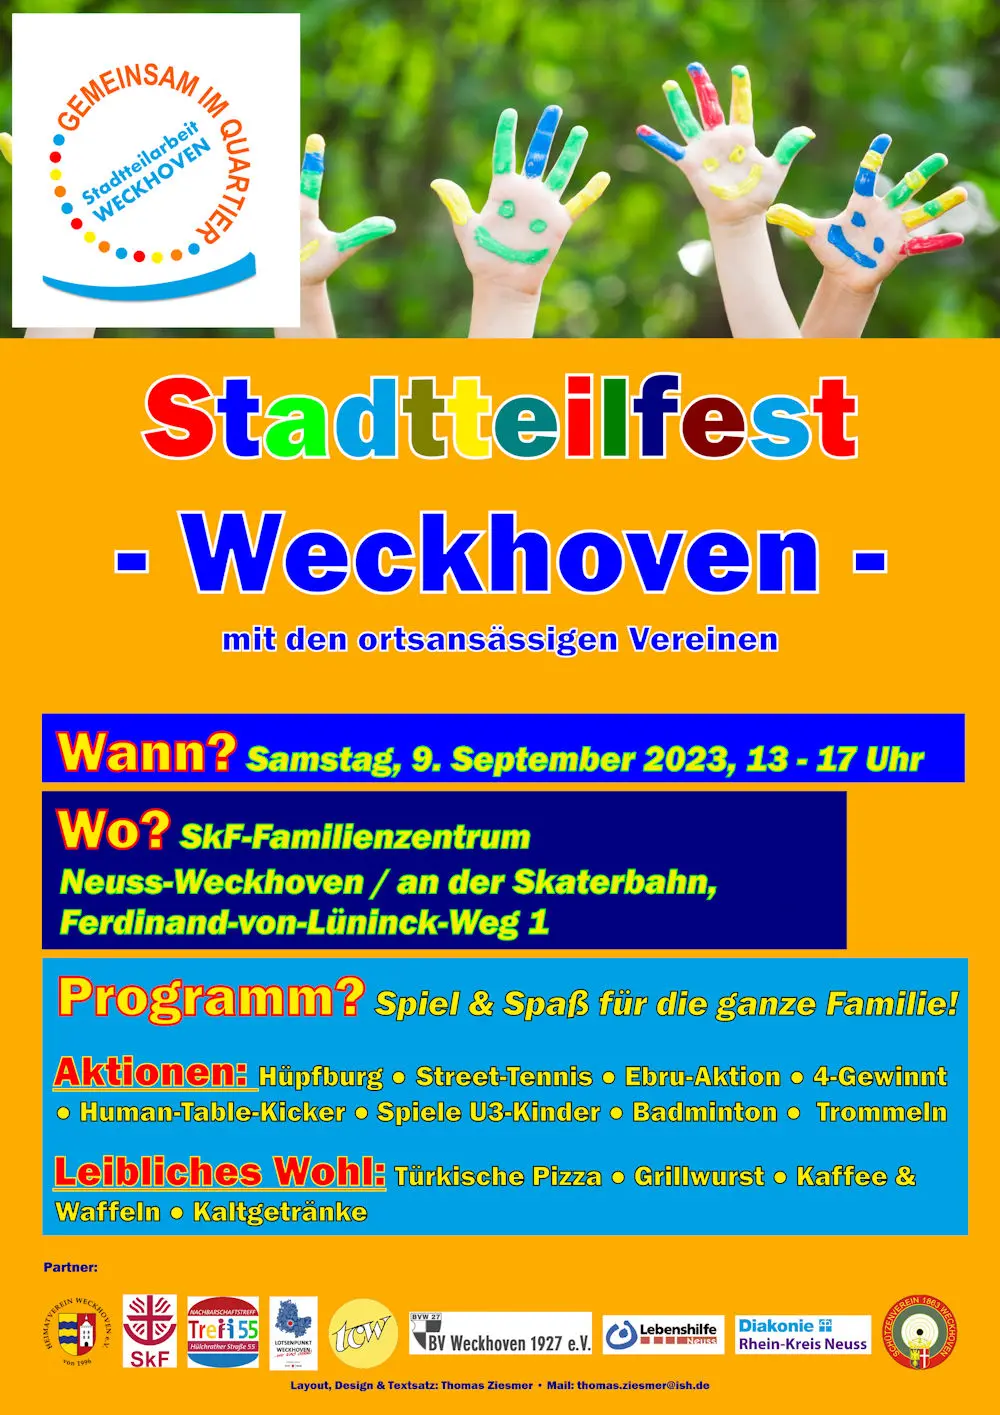 Stadtteilfest Weckhoven am 9. September